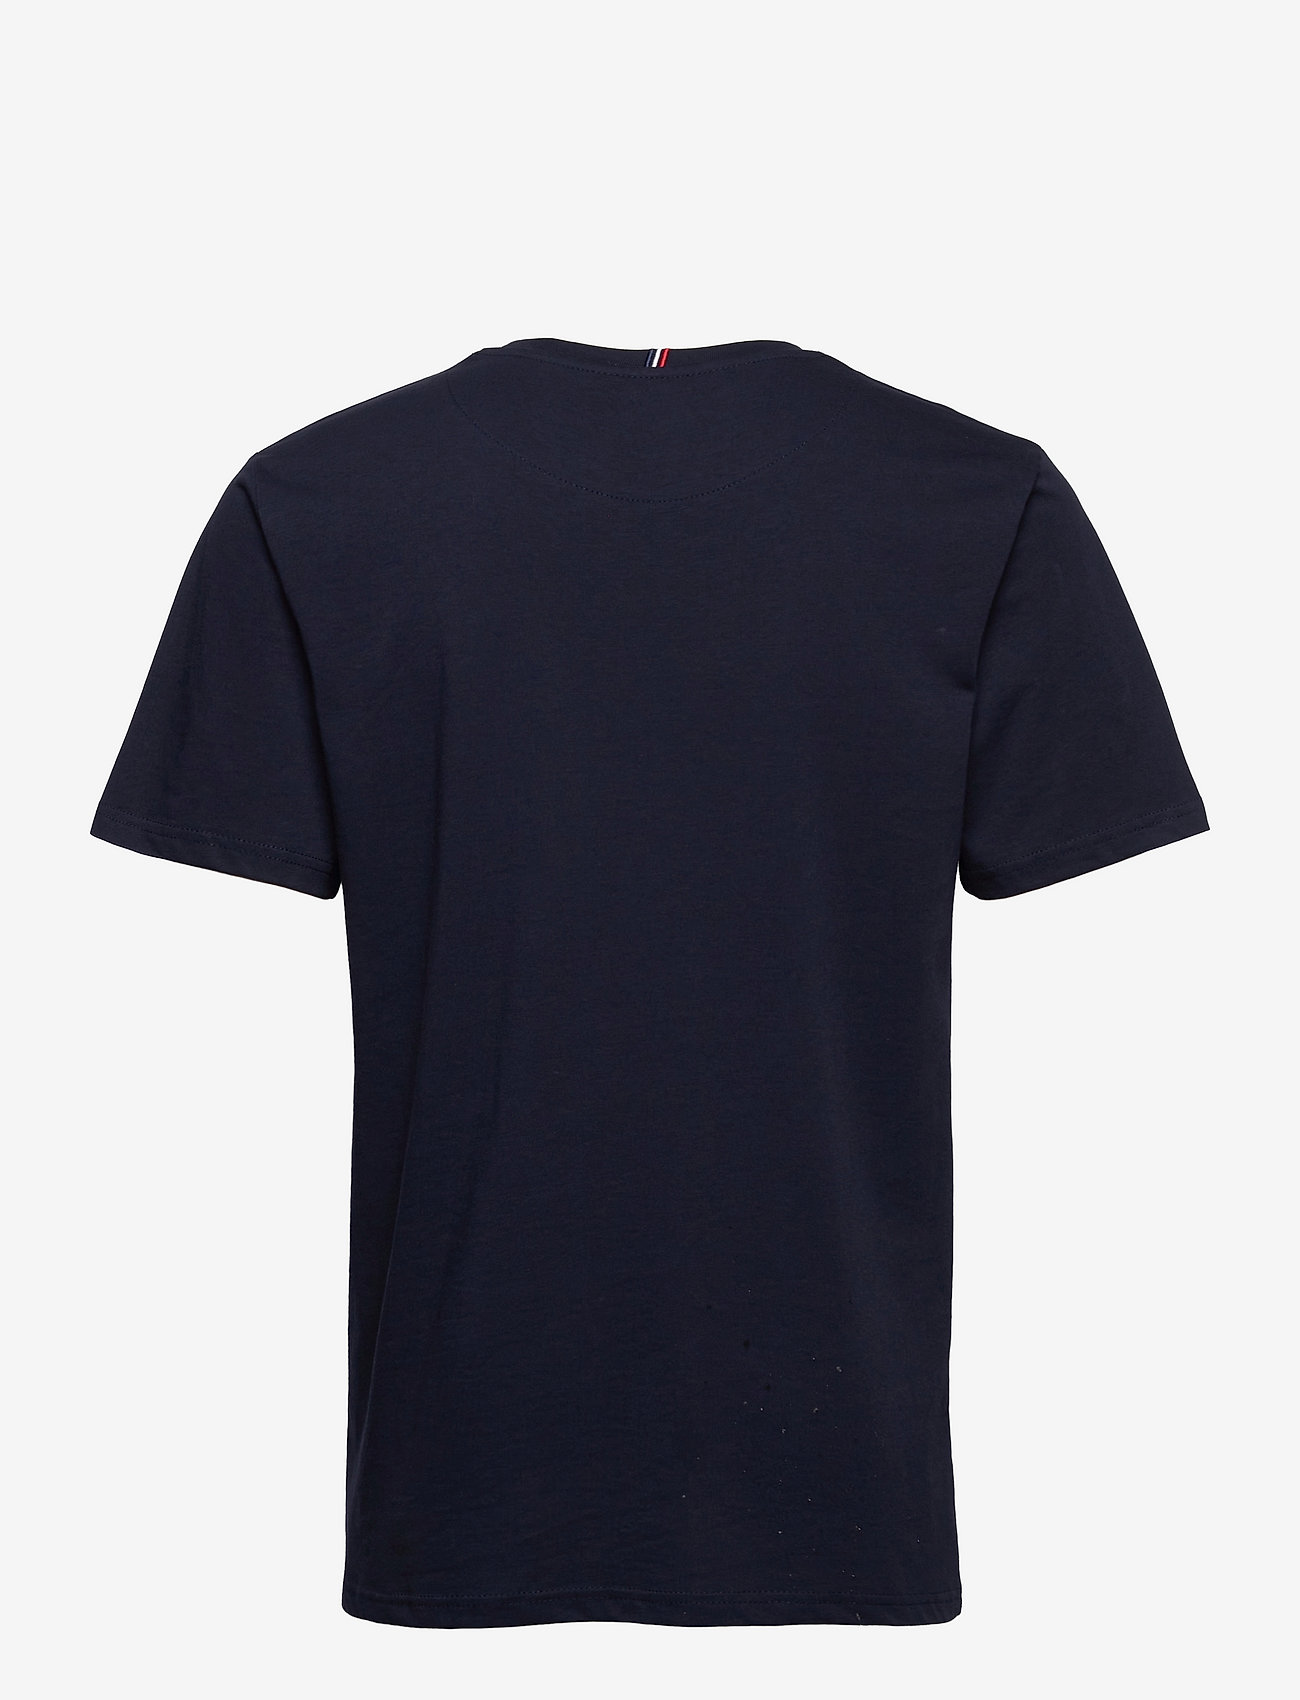 Les Deux - Marais T-Shirt - nordic style - dark navy - 1